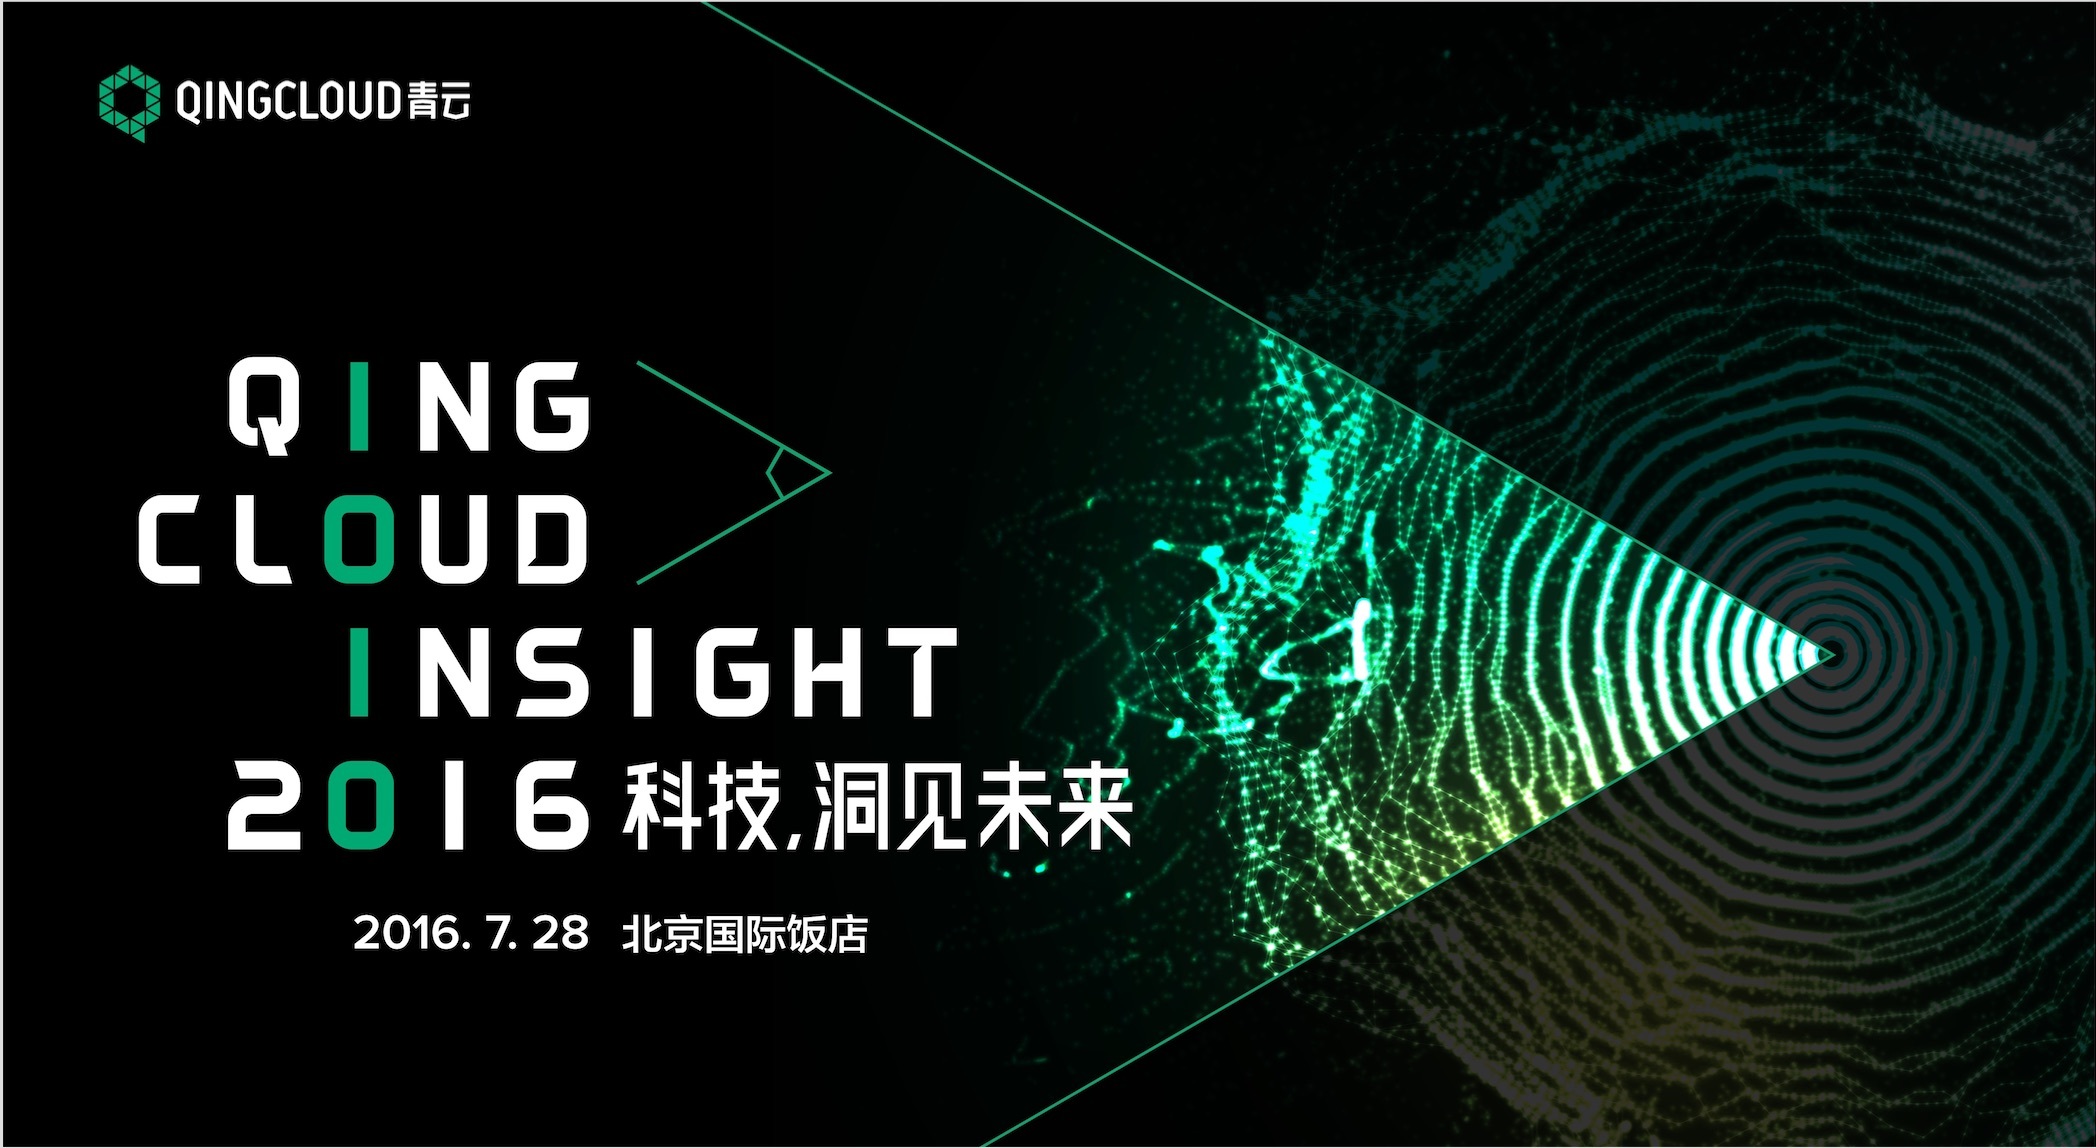 QingCloud Insight 2016 | 科技,洞见未来 - 微信公